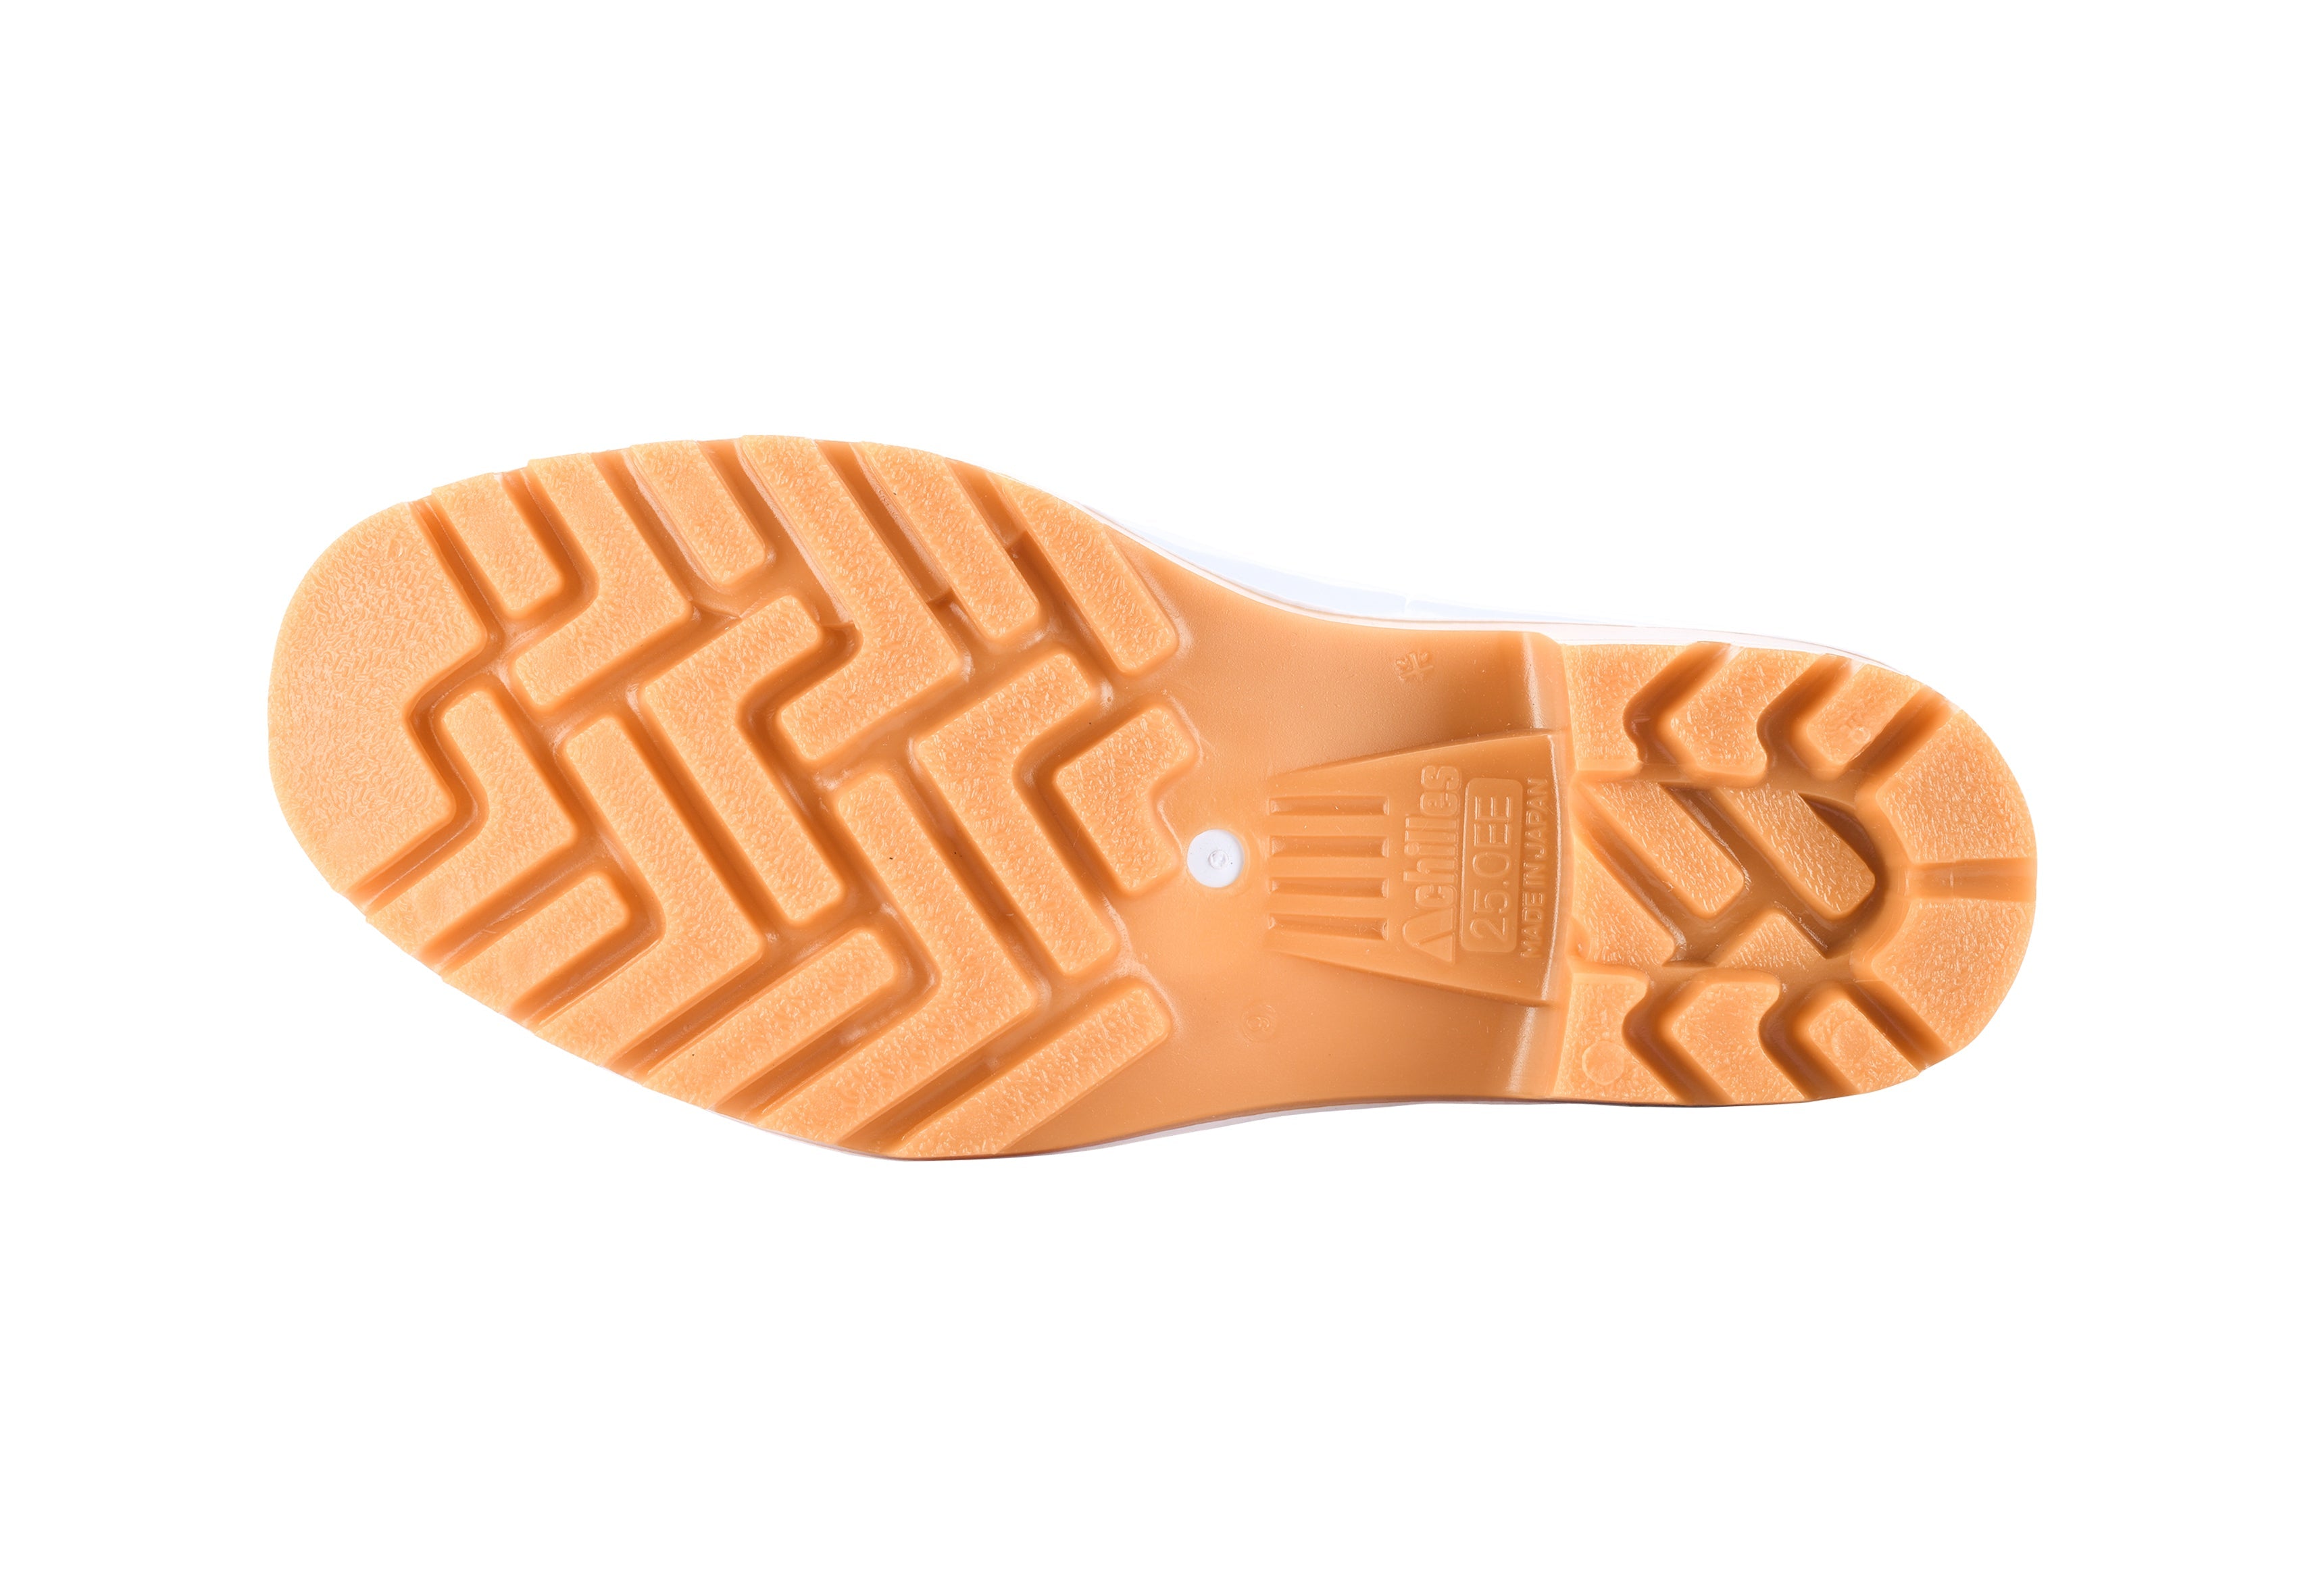 Labor Rain Boots 30cm (Japan Made)-Achilles-BK-JP/TW Size-1: 230-偉豐鞋 WELL SHOE HK-Well Shoe-偉豐鞋-偉豐網-荃灣鞋店-Functional shoes-Hong Kong Tsuen Wan Shoe Store-Tai Wan Shoe-Japan Shoe-高品質功能鞋-台灣進口鞋-日本進口鞋-High-quality shoes-鞋類配件-荃灣進口鞋-香港鞋店-優質鞋類產品-水靴-帆布鞋-廚師鞋-香港鞋品牌-Hong Kong Shoes brand-長者鞋-Hong Kong Rain Boots-Kitchen shoes-Cruthes-Slipper-Well Shoe Hong Kong-Anello-Arriba-休閒鞋-舒適鞋-健康鞋-皮鞋-Healthy shoes-Leather shoes-Hiking shoes